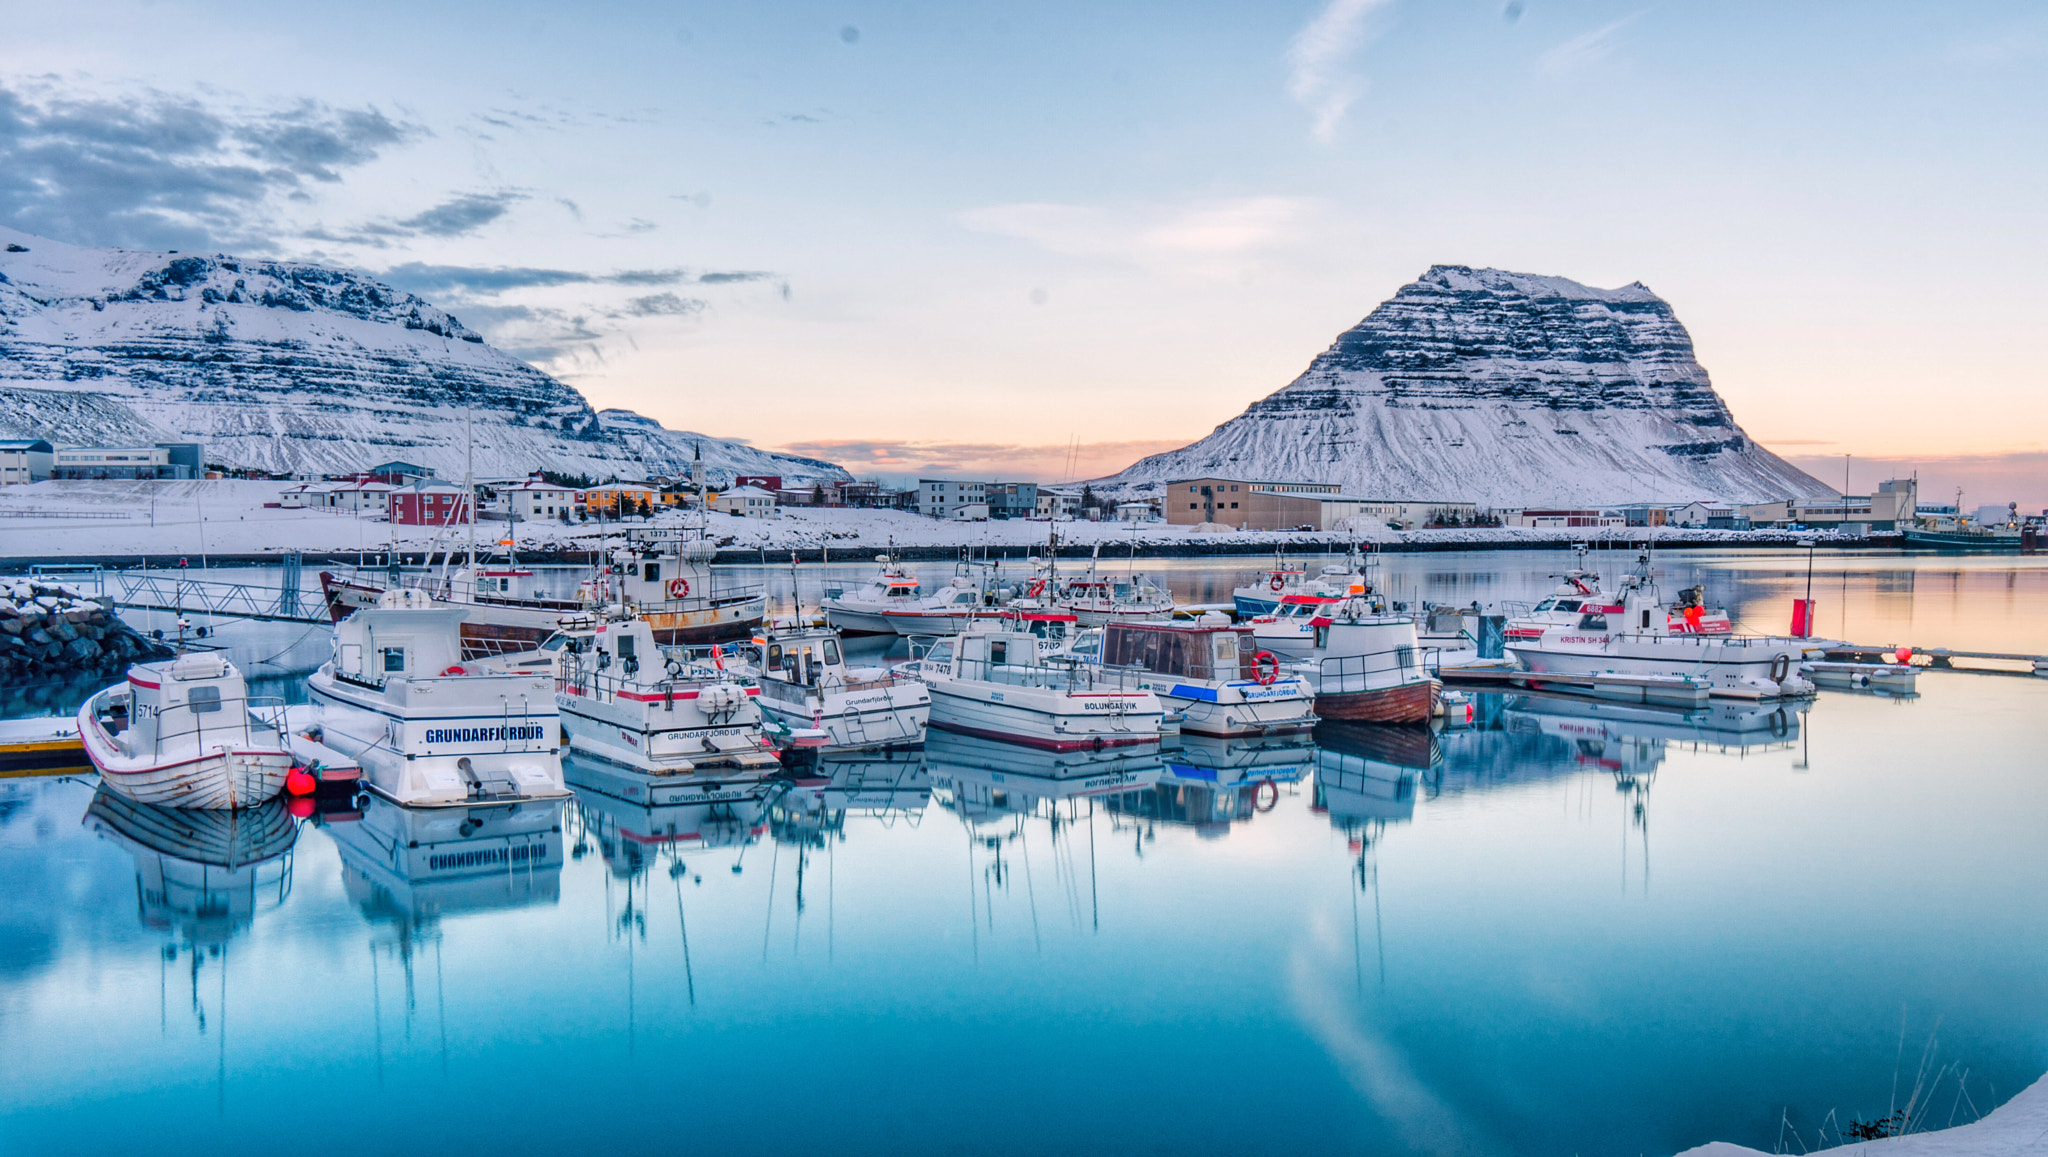 Sony a6300 sample photo. The small fishing village of grundarfjordur, iceland photography